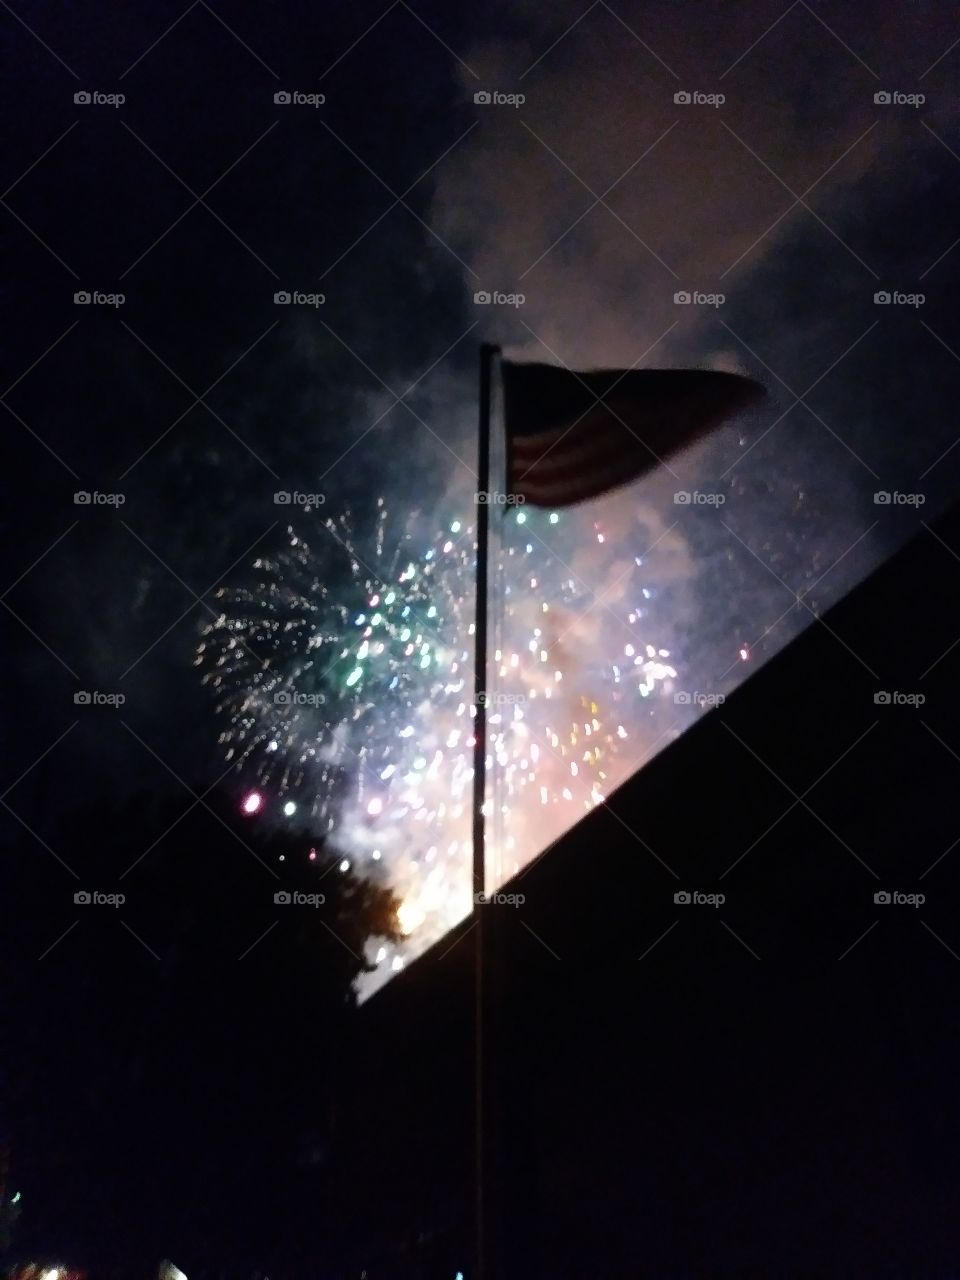 usa flag with fireworks